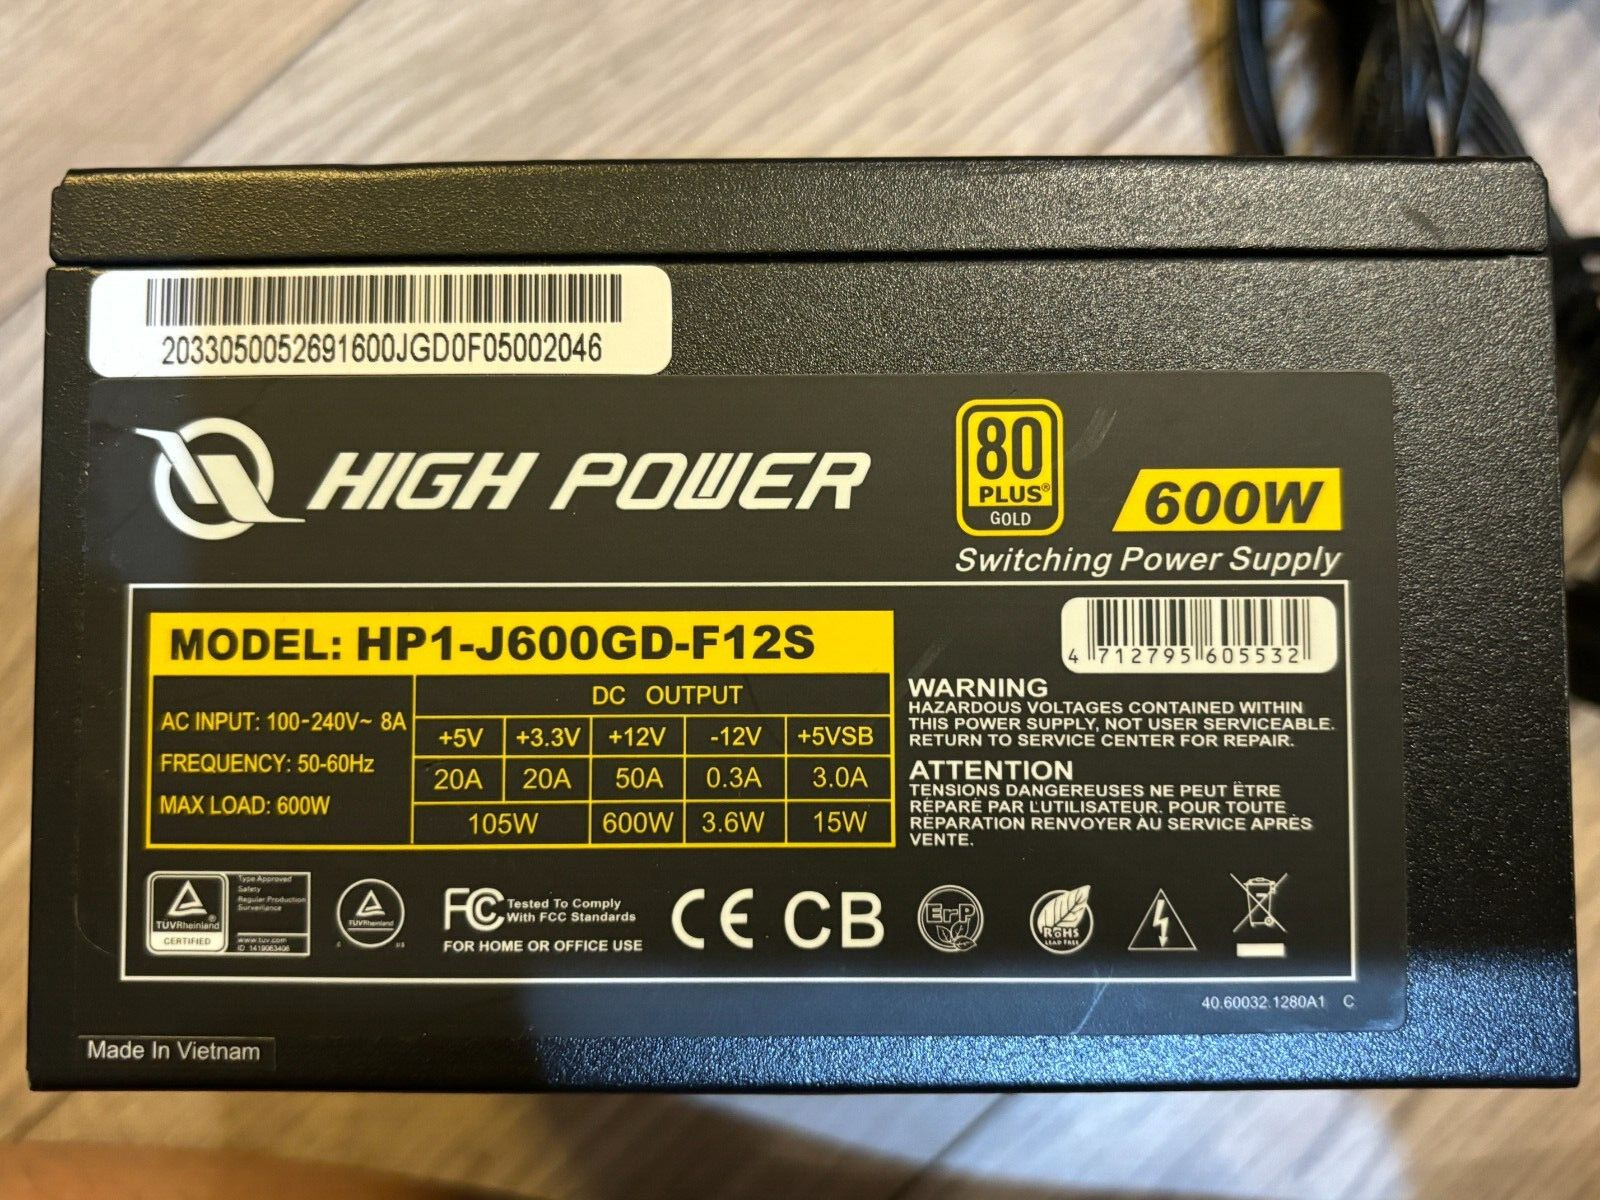 High Power HP1-J600GD-F12S 600W 80plus Gold ATX/EPS 12V Gaming PC Power Supply